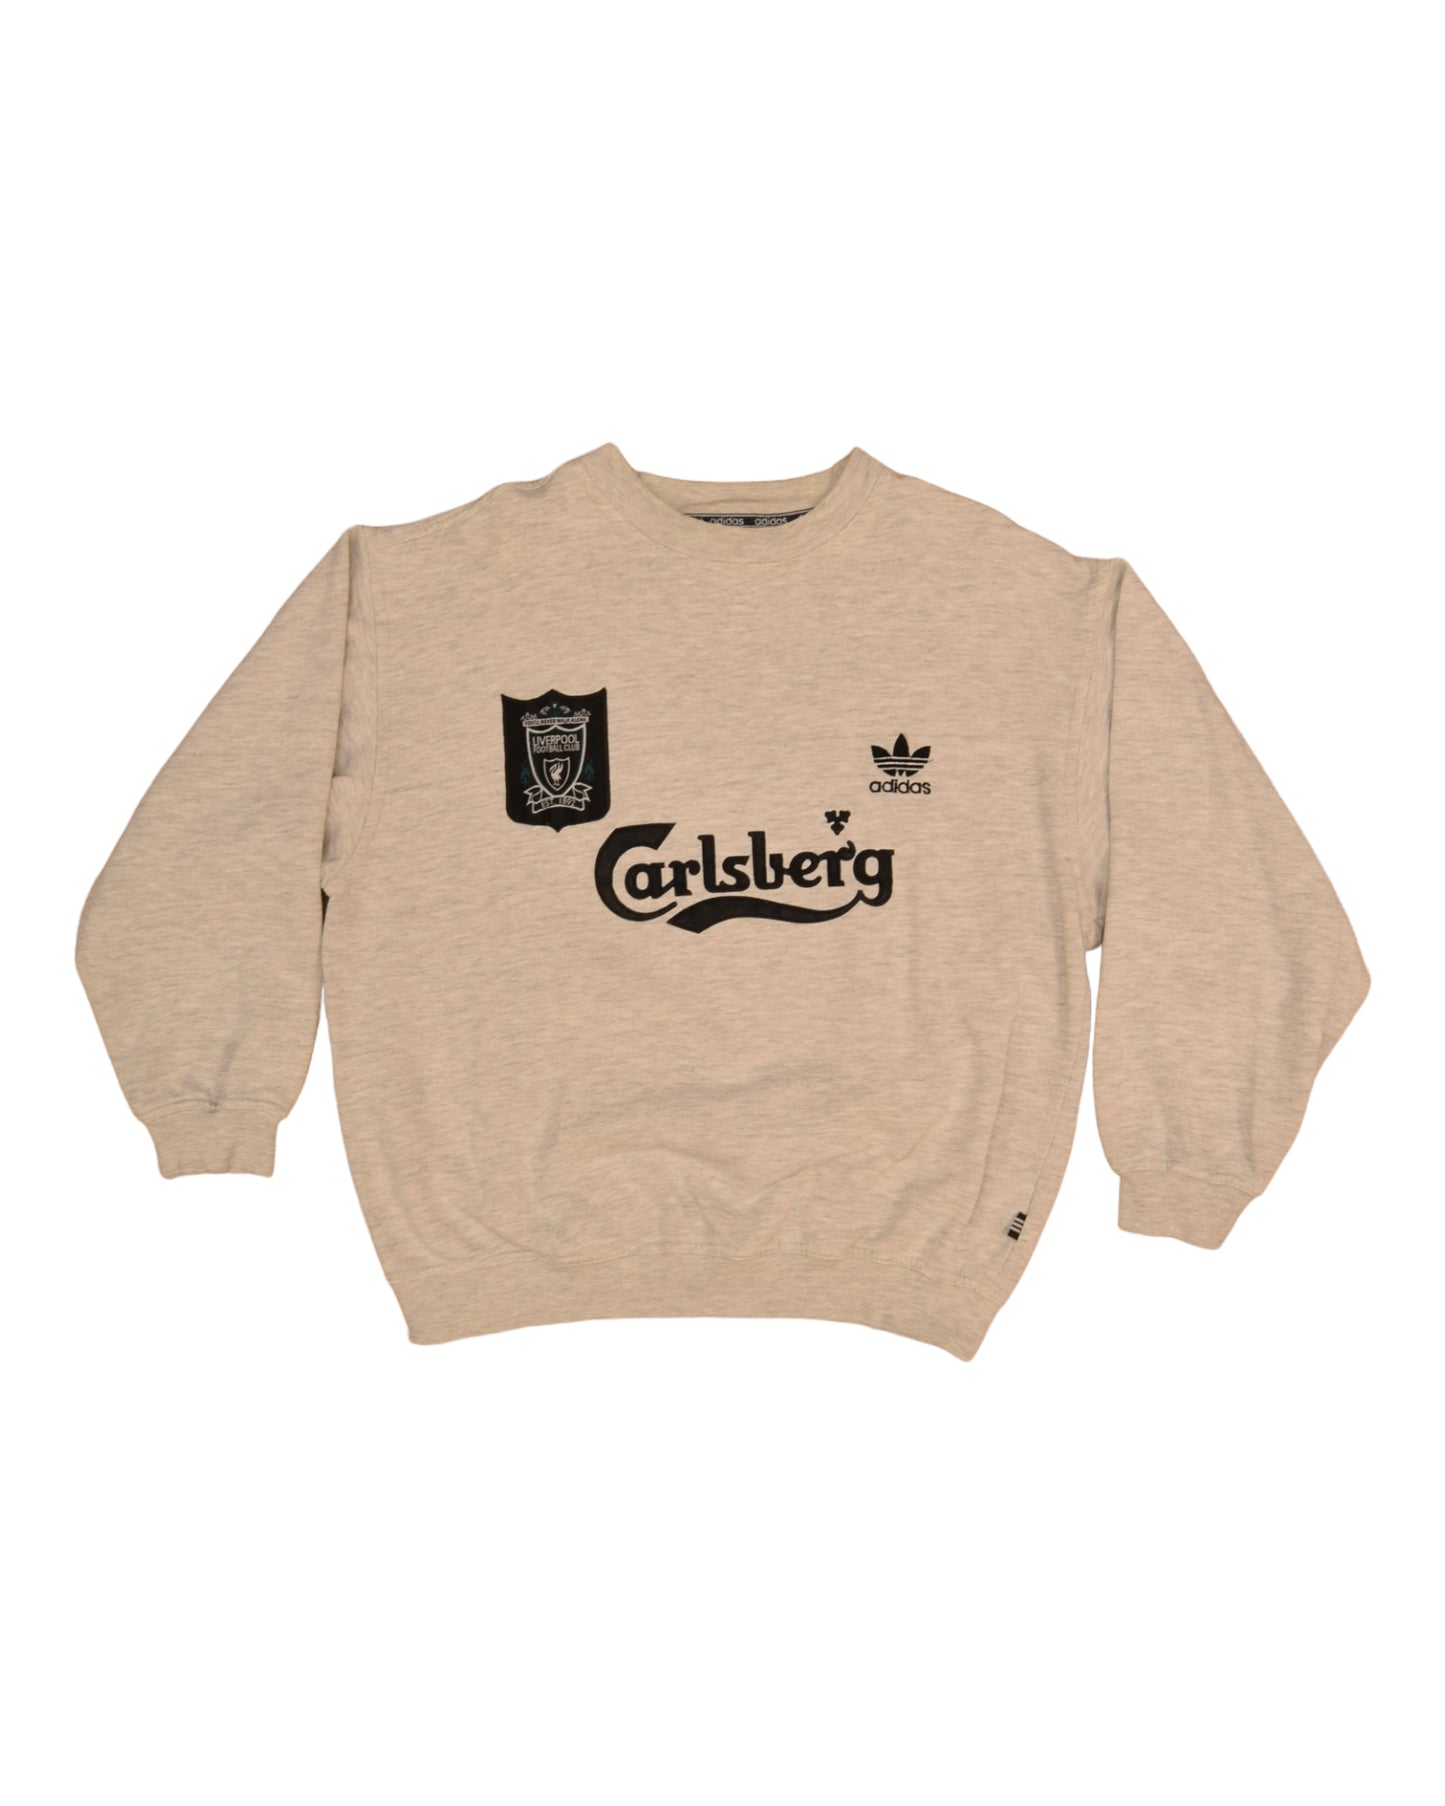 Vintage Liverpool Adidas 1995 - 1996 Sweatshirt Crew Neck Carlsberg Grey Made in UK 40/42 Cotton